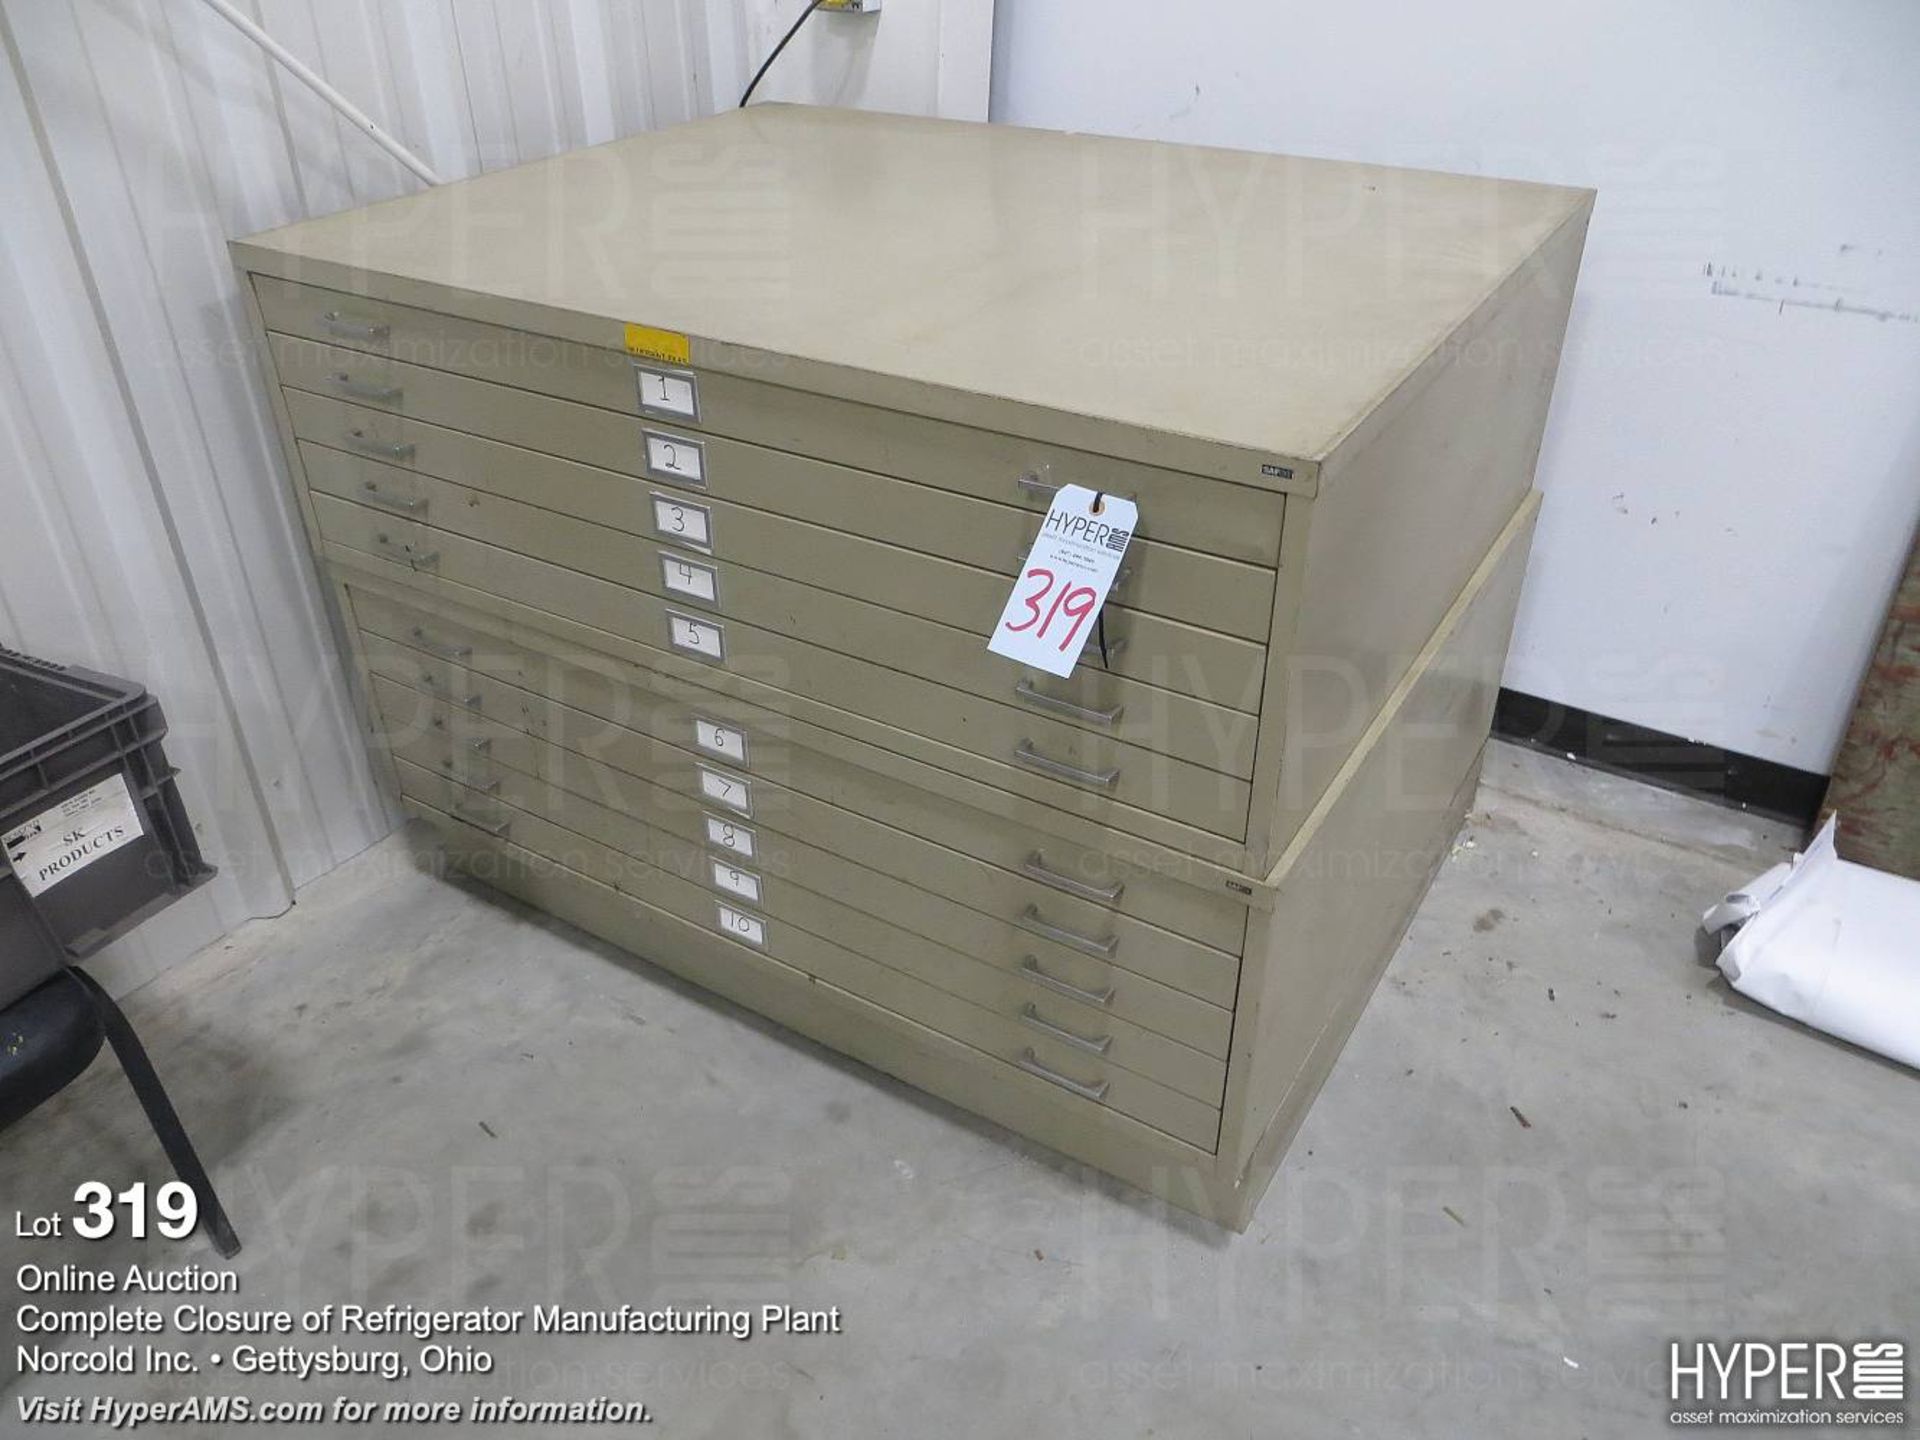 (2) Safco 5-drawer blueprint cabinets